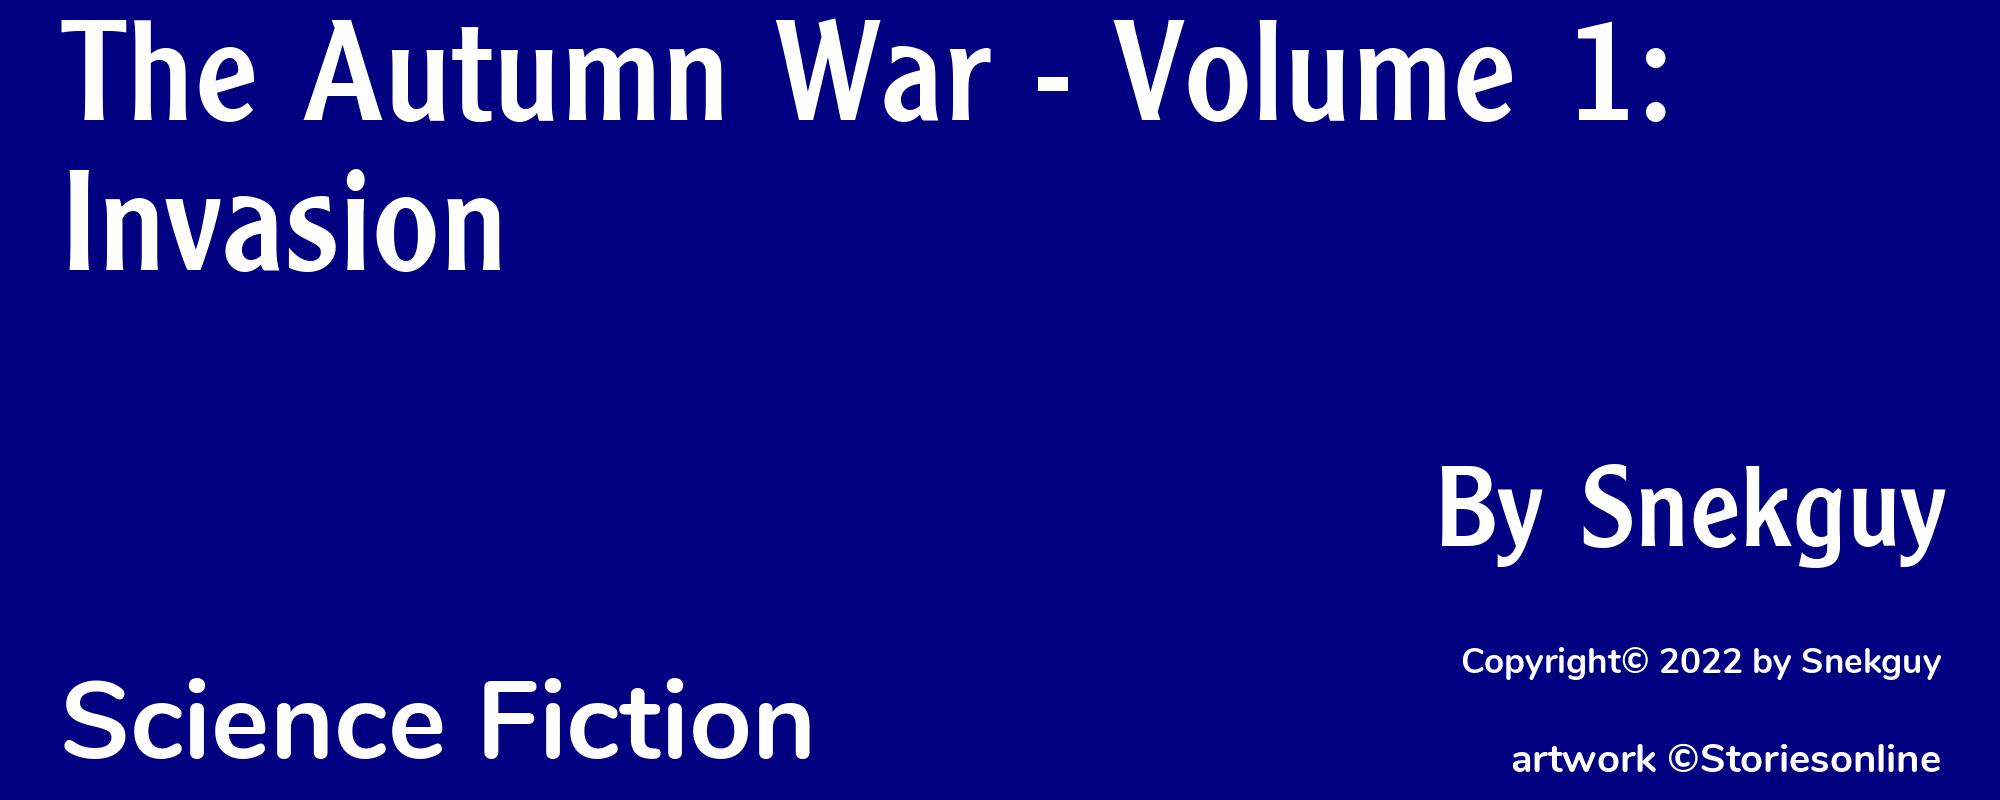 The Autumn War - Volume 1: Invasion - Cover